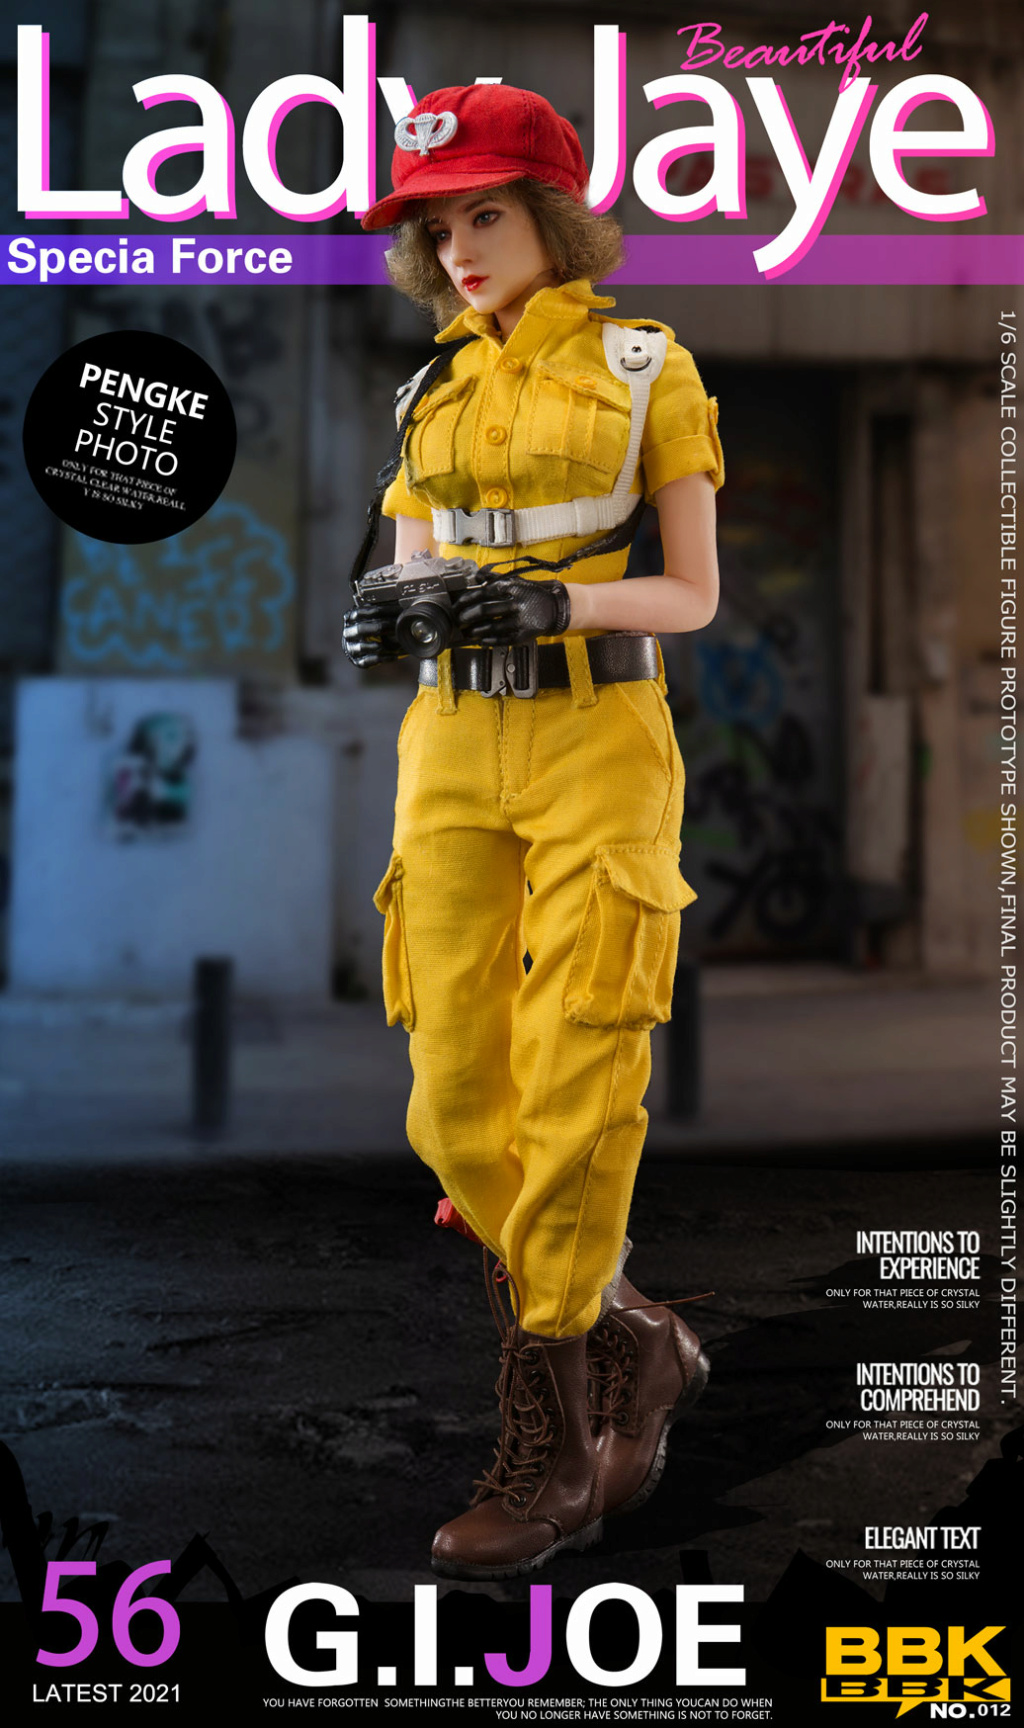 BBK012 - NEW PRODUCT: BBK: 1/6 GIJOE Jay Female Soldier Action Figure# 14580013